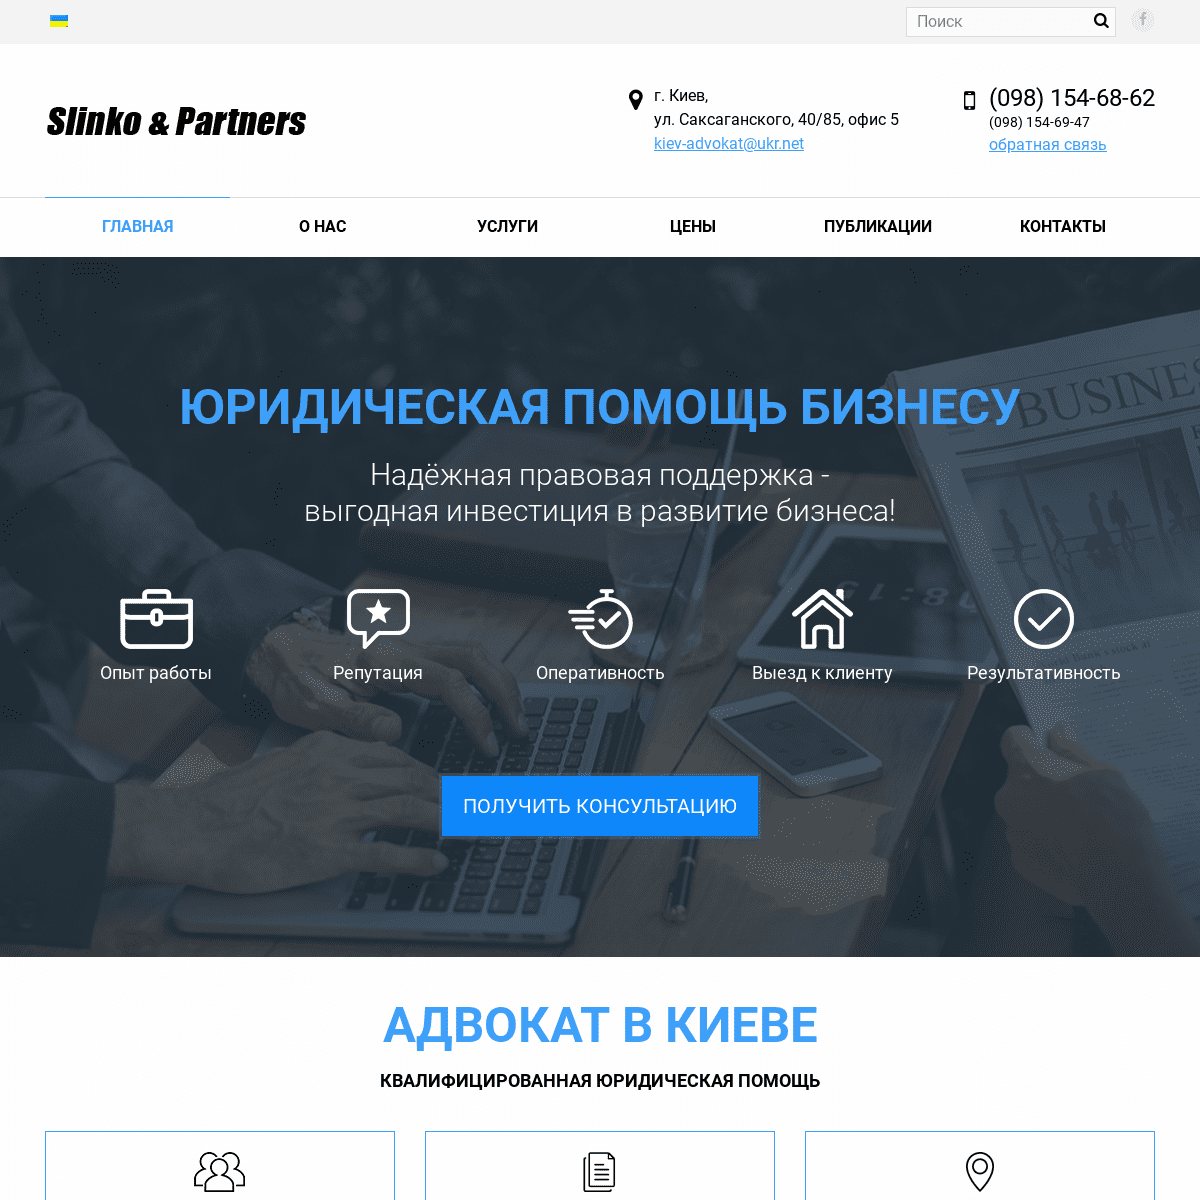 A complete backup of https://slinko.com.ua